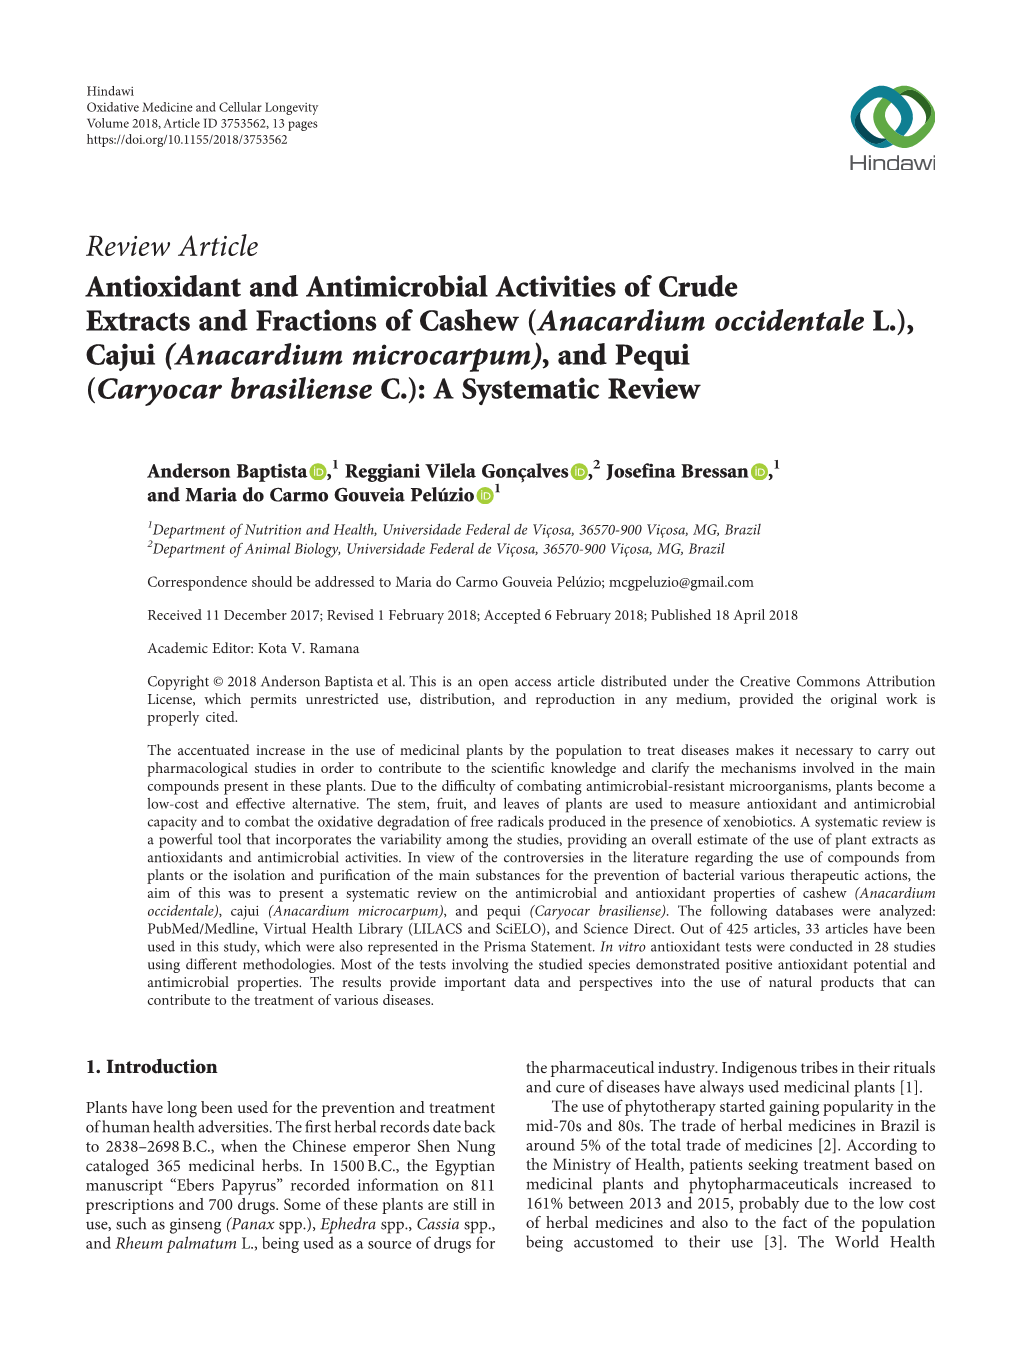 (Anacardium Occidentale L.), Cajui (Anacardium Microcarpum), and Pequi (Caryocar Brasiliense C.): a Systematic Review